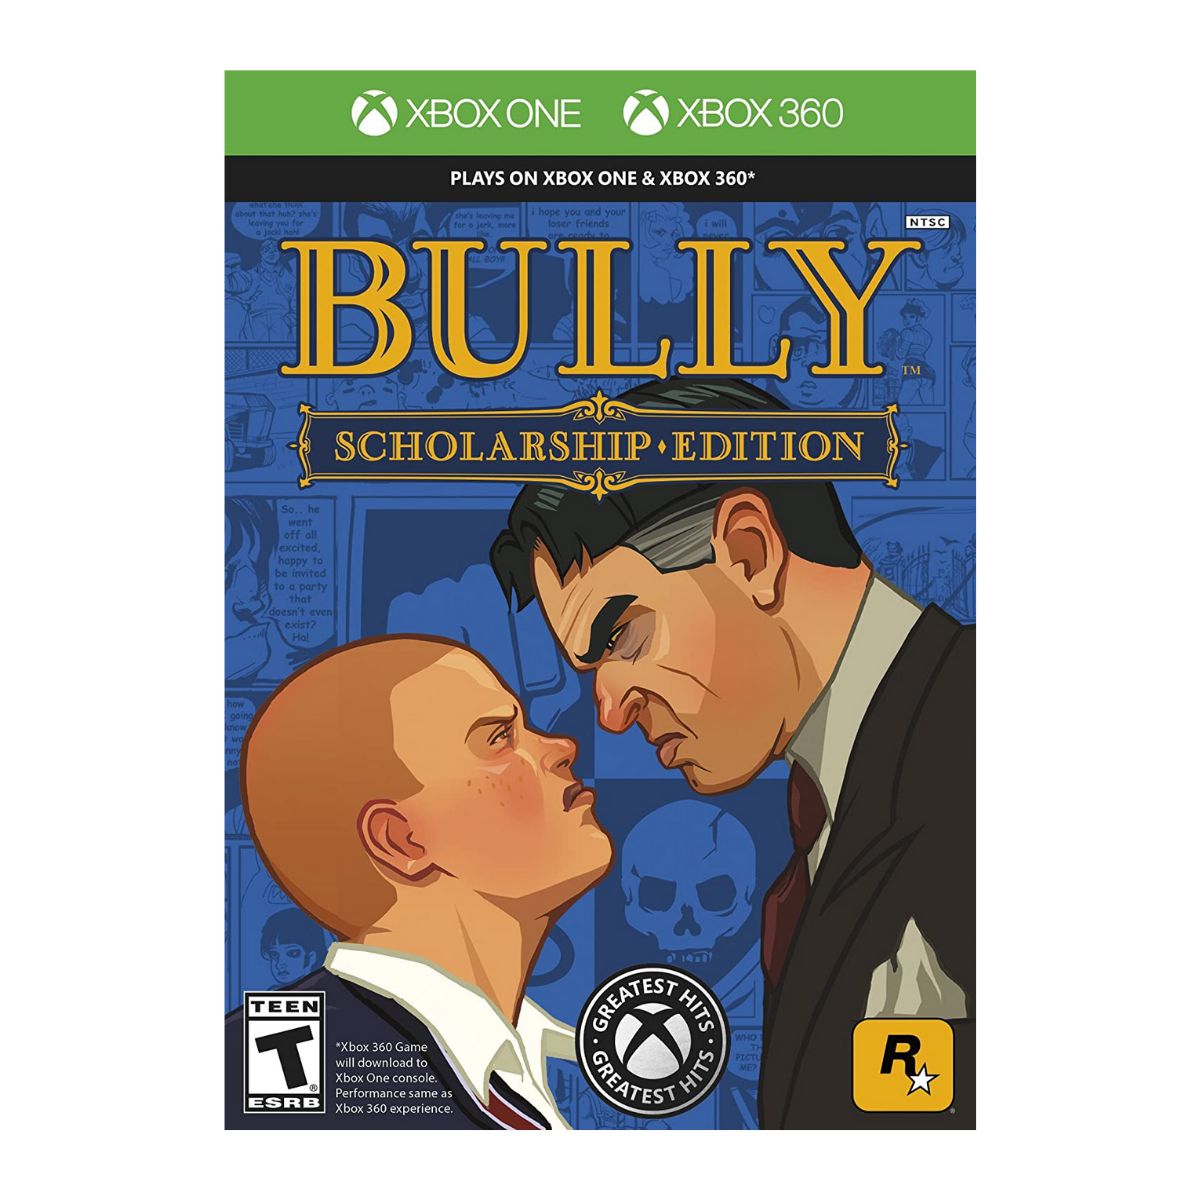 E se o nosso querido - Bully Scholarship Edition - F.C